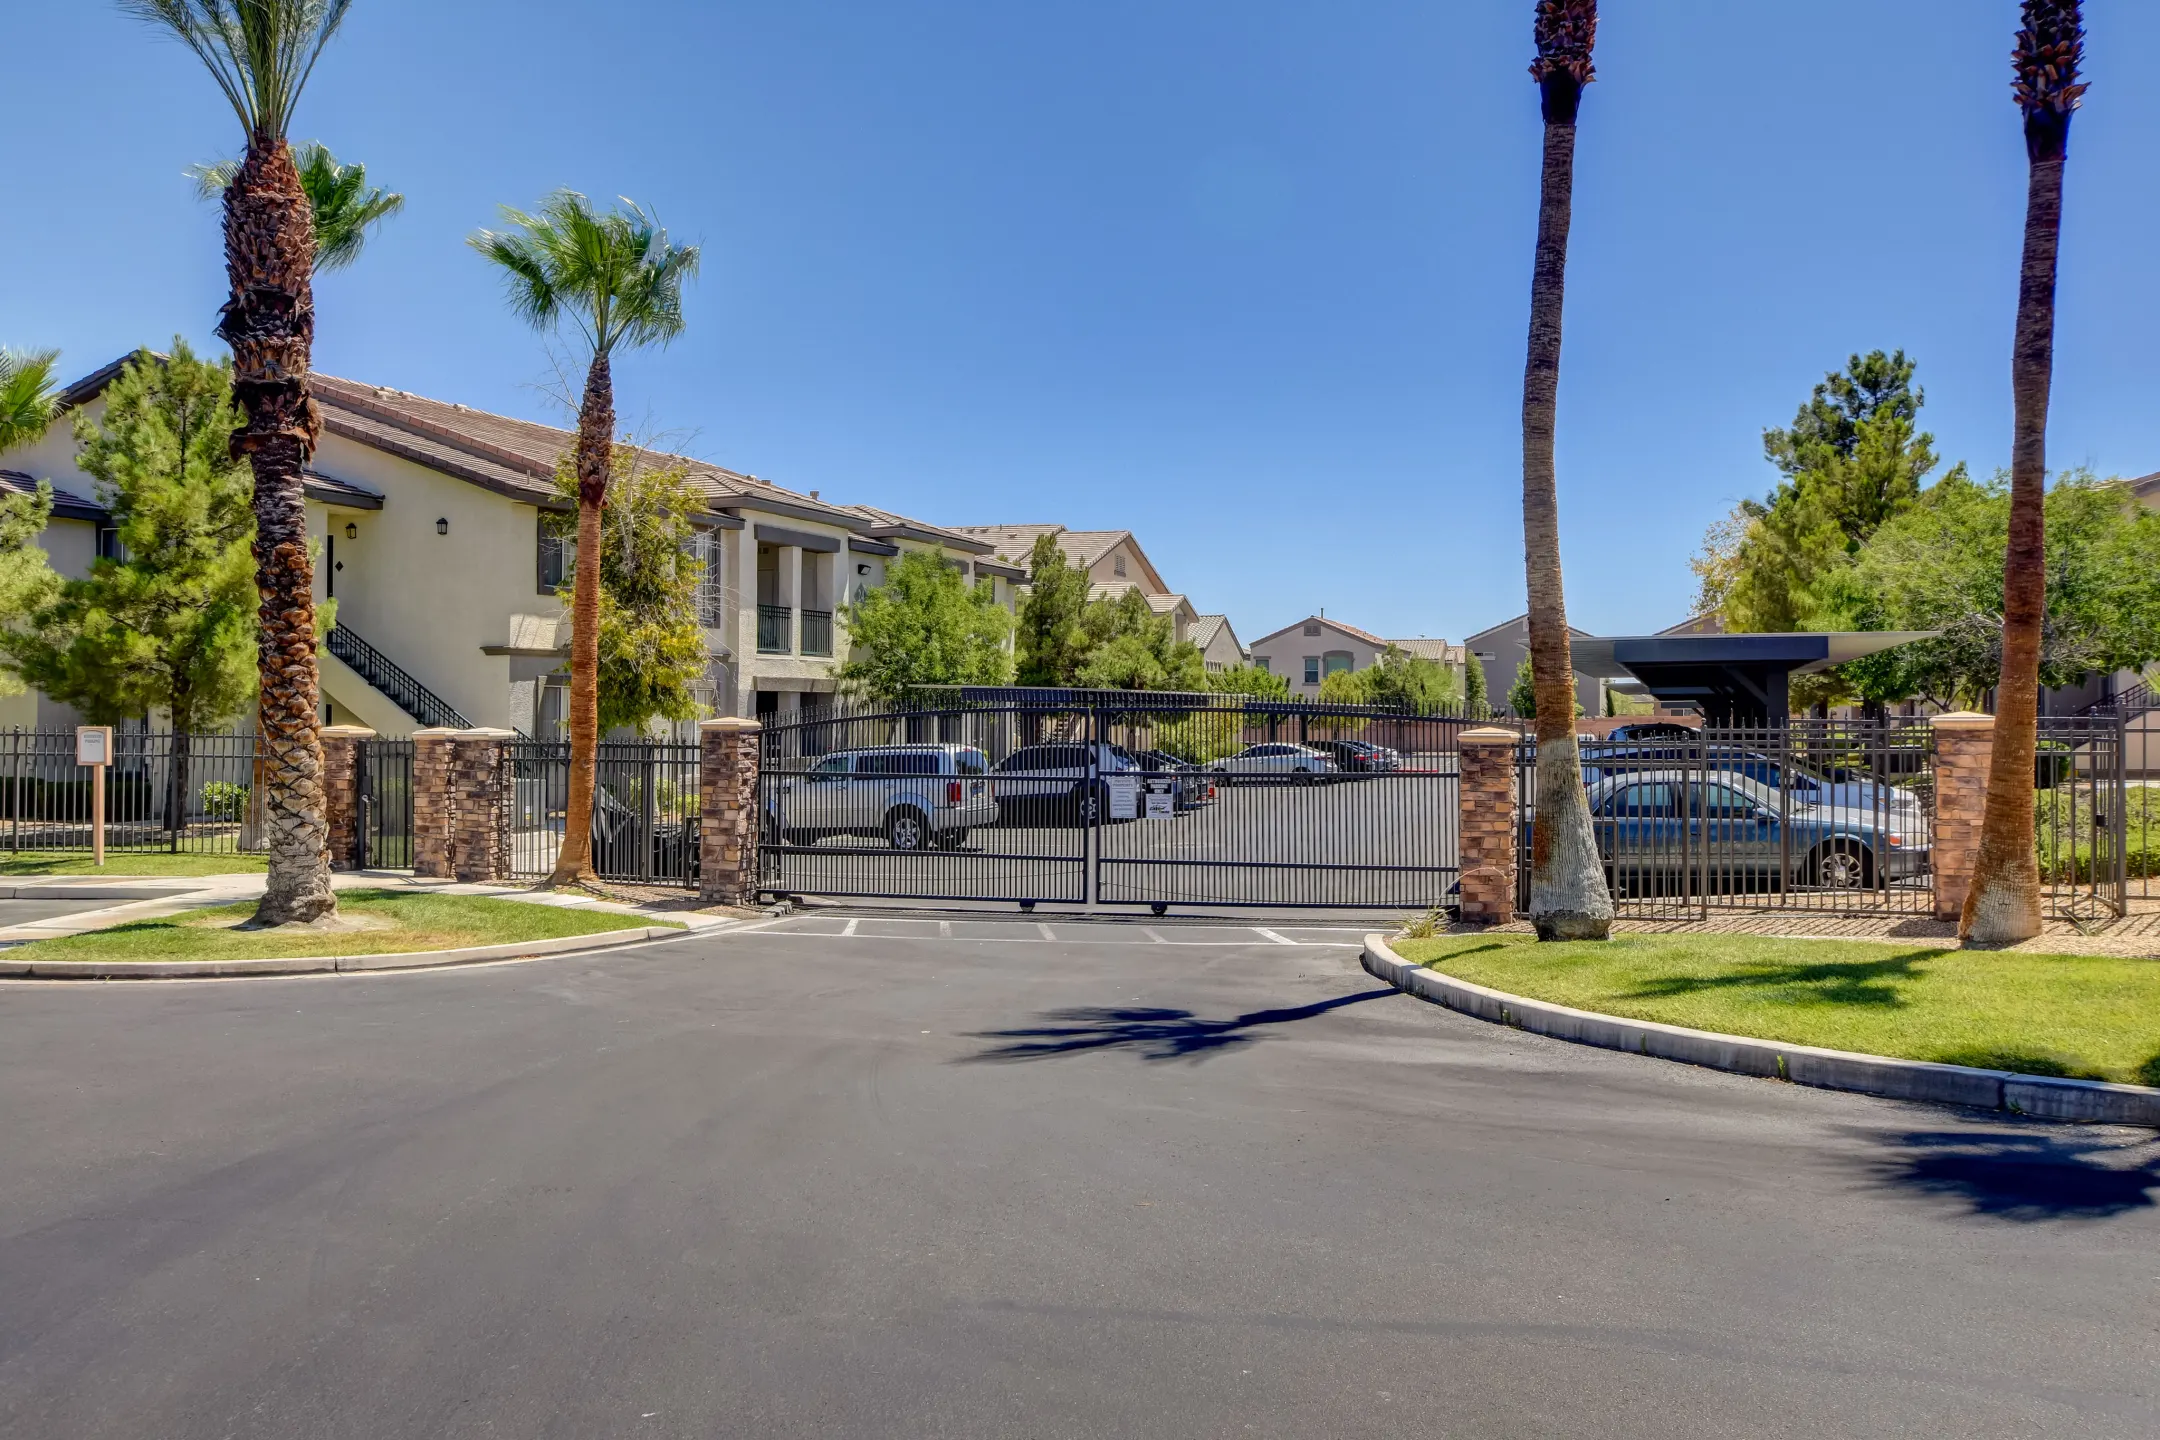 Acerno Villas Apartment Homes Apartments - Las Vegas, NV 89148